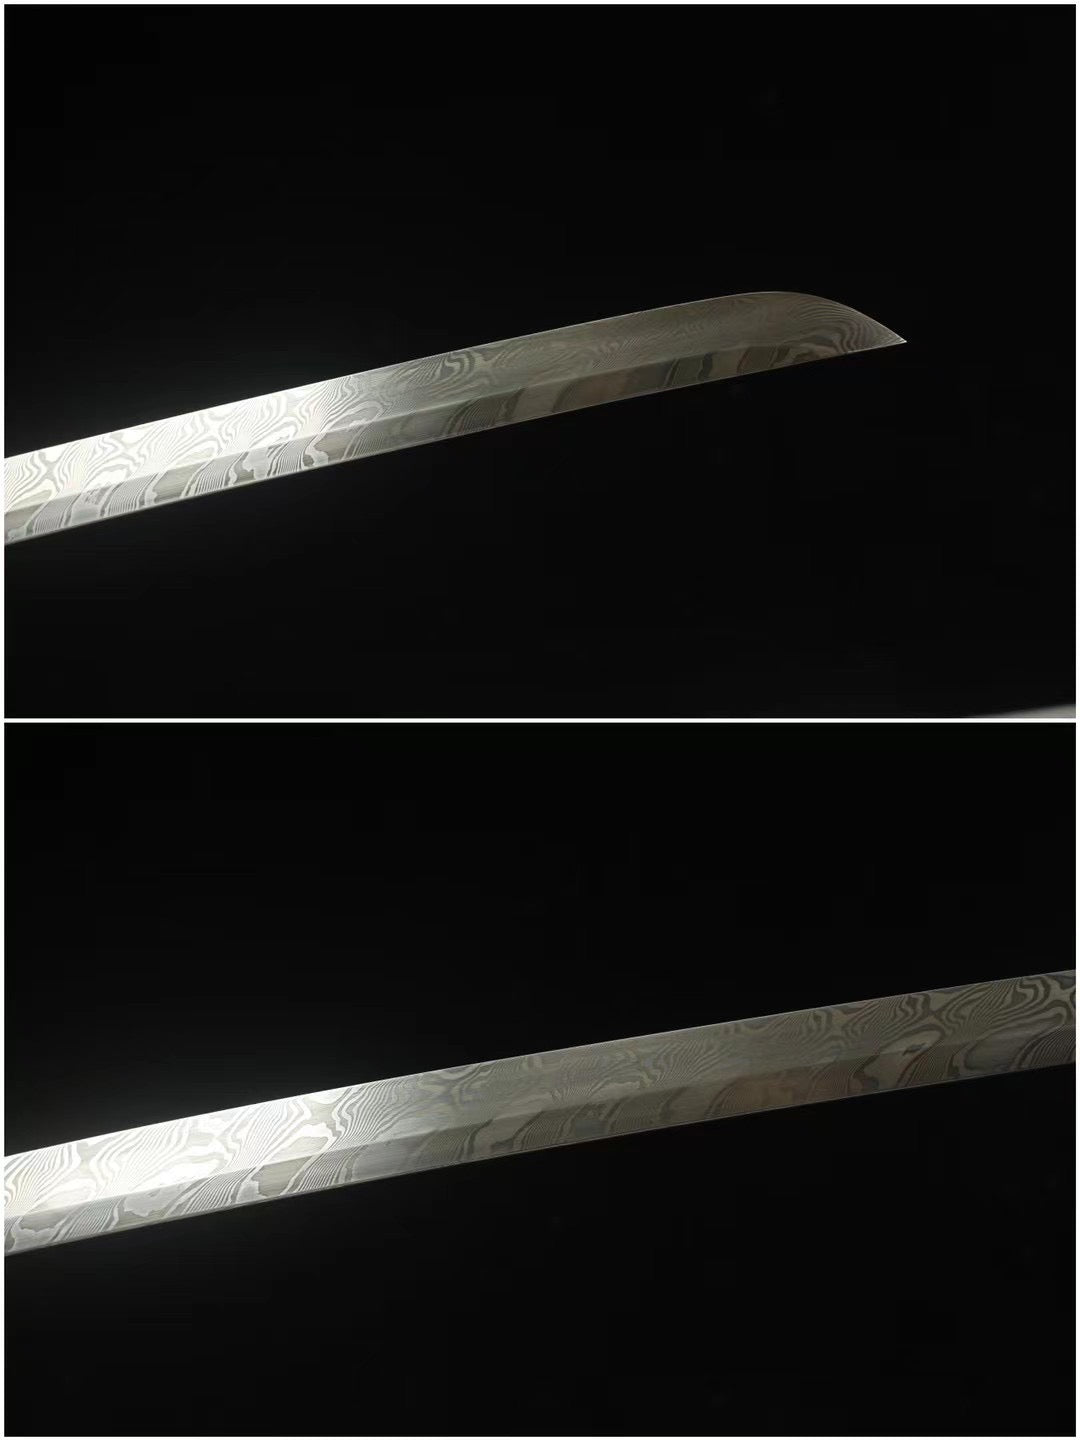 Damascus Steel Sword Demon Dragon Katana Sword,Real Handmade Japanese Samurai Sword Full Tang